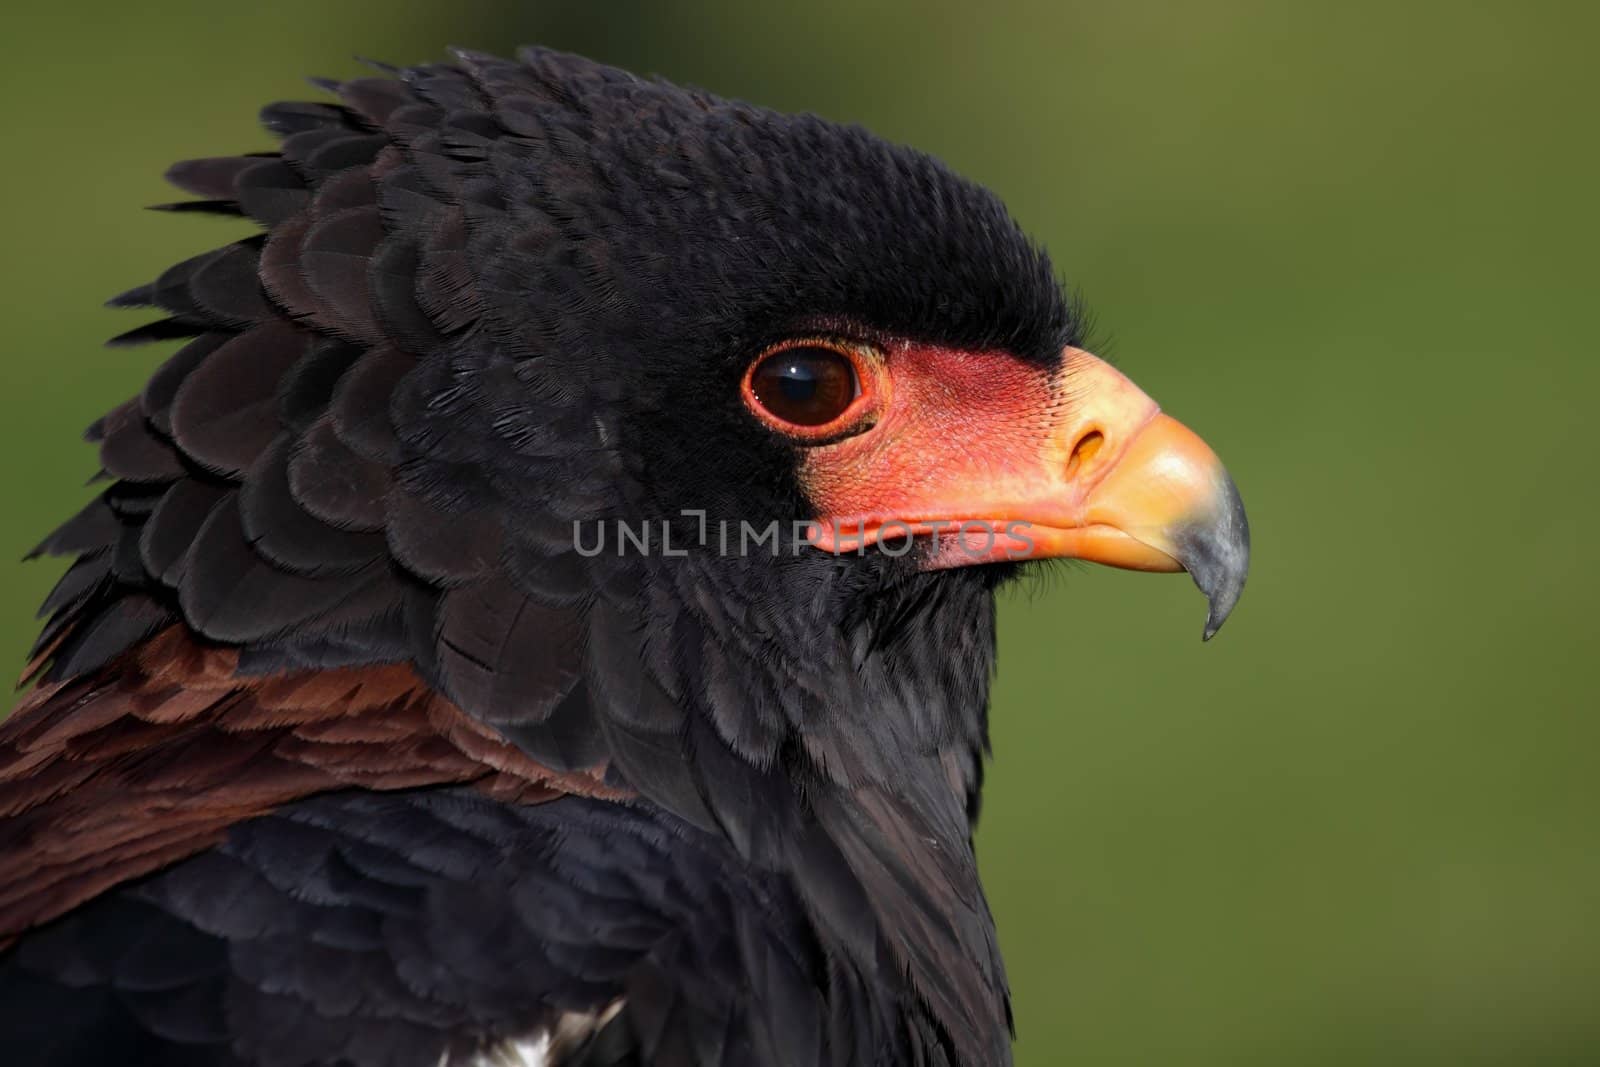 a portrait of a beautiful eagle